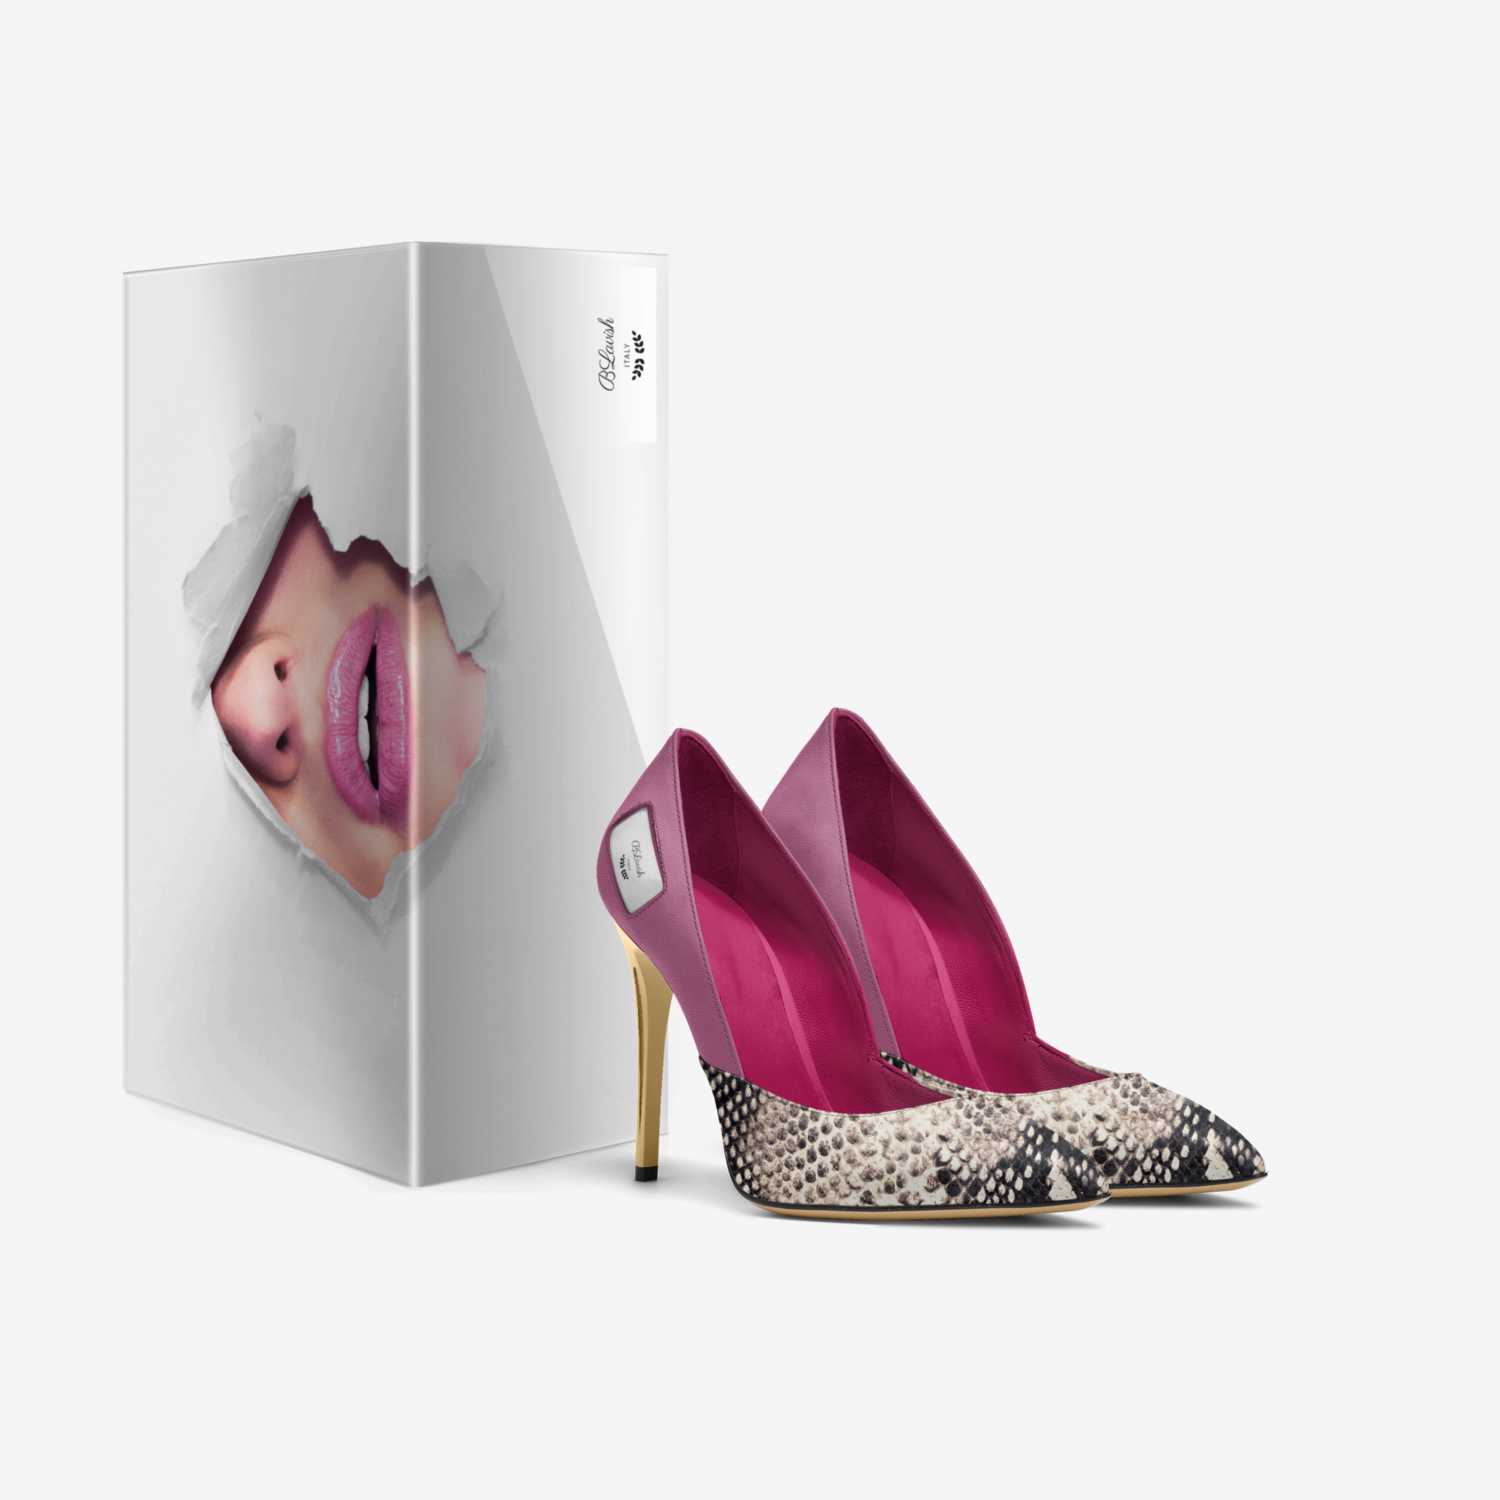 BLavish custom made in Italy shoes by Kimberly Myers | Box view